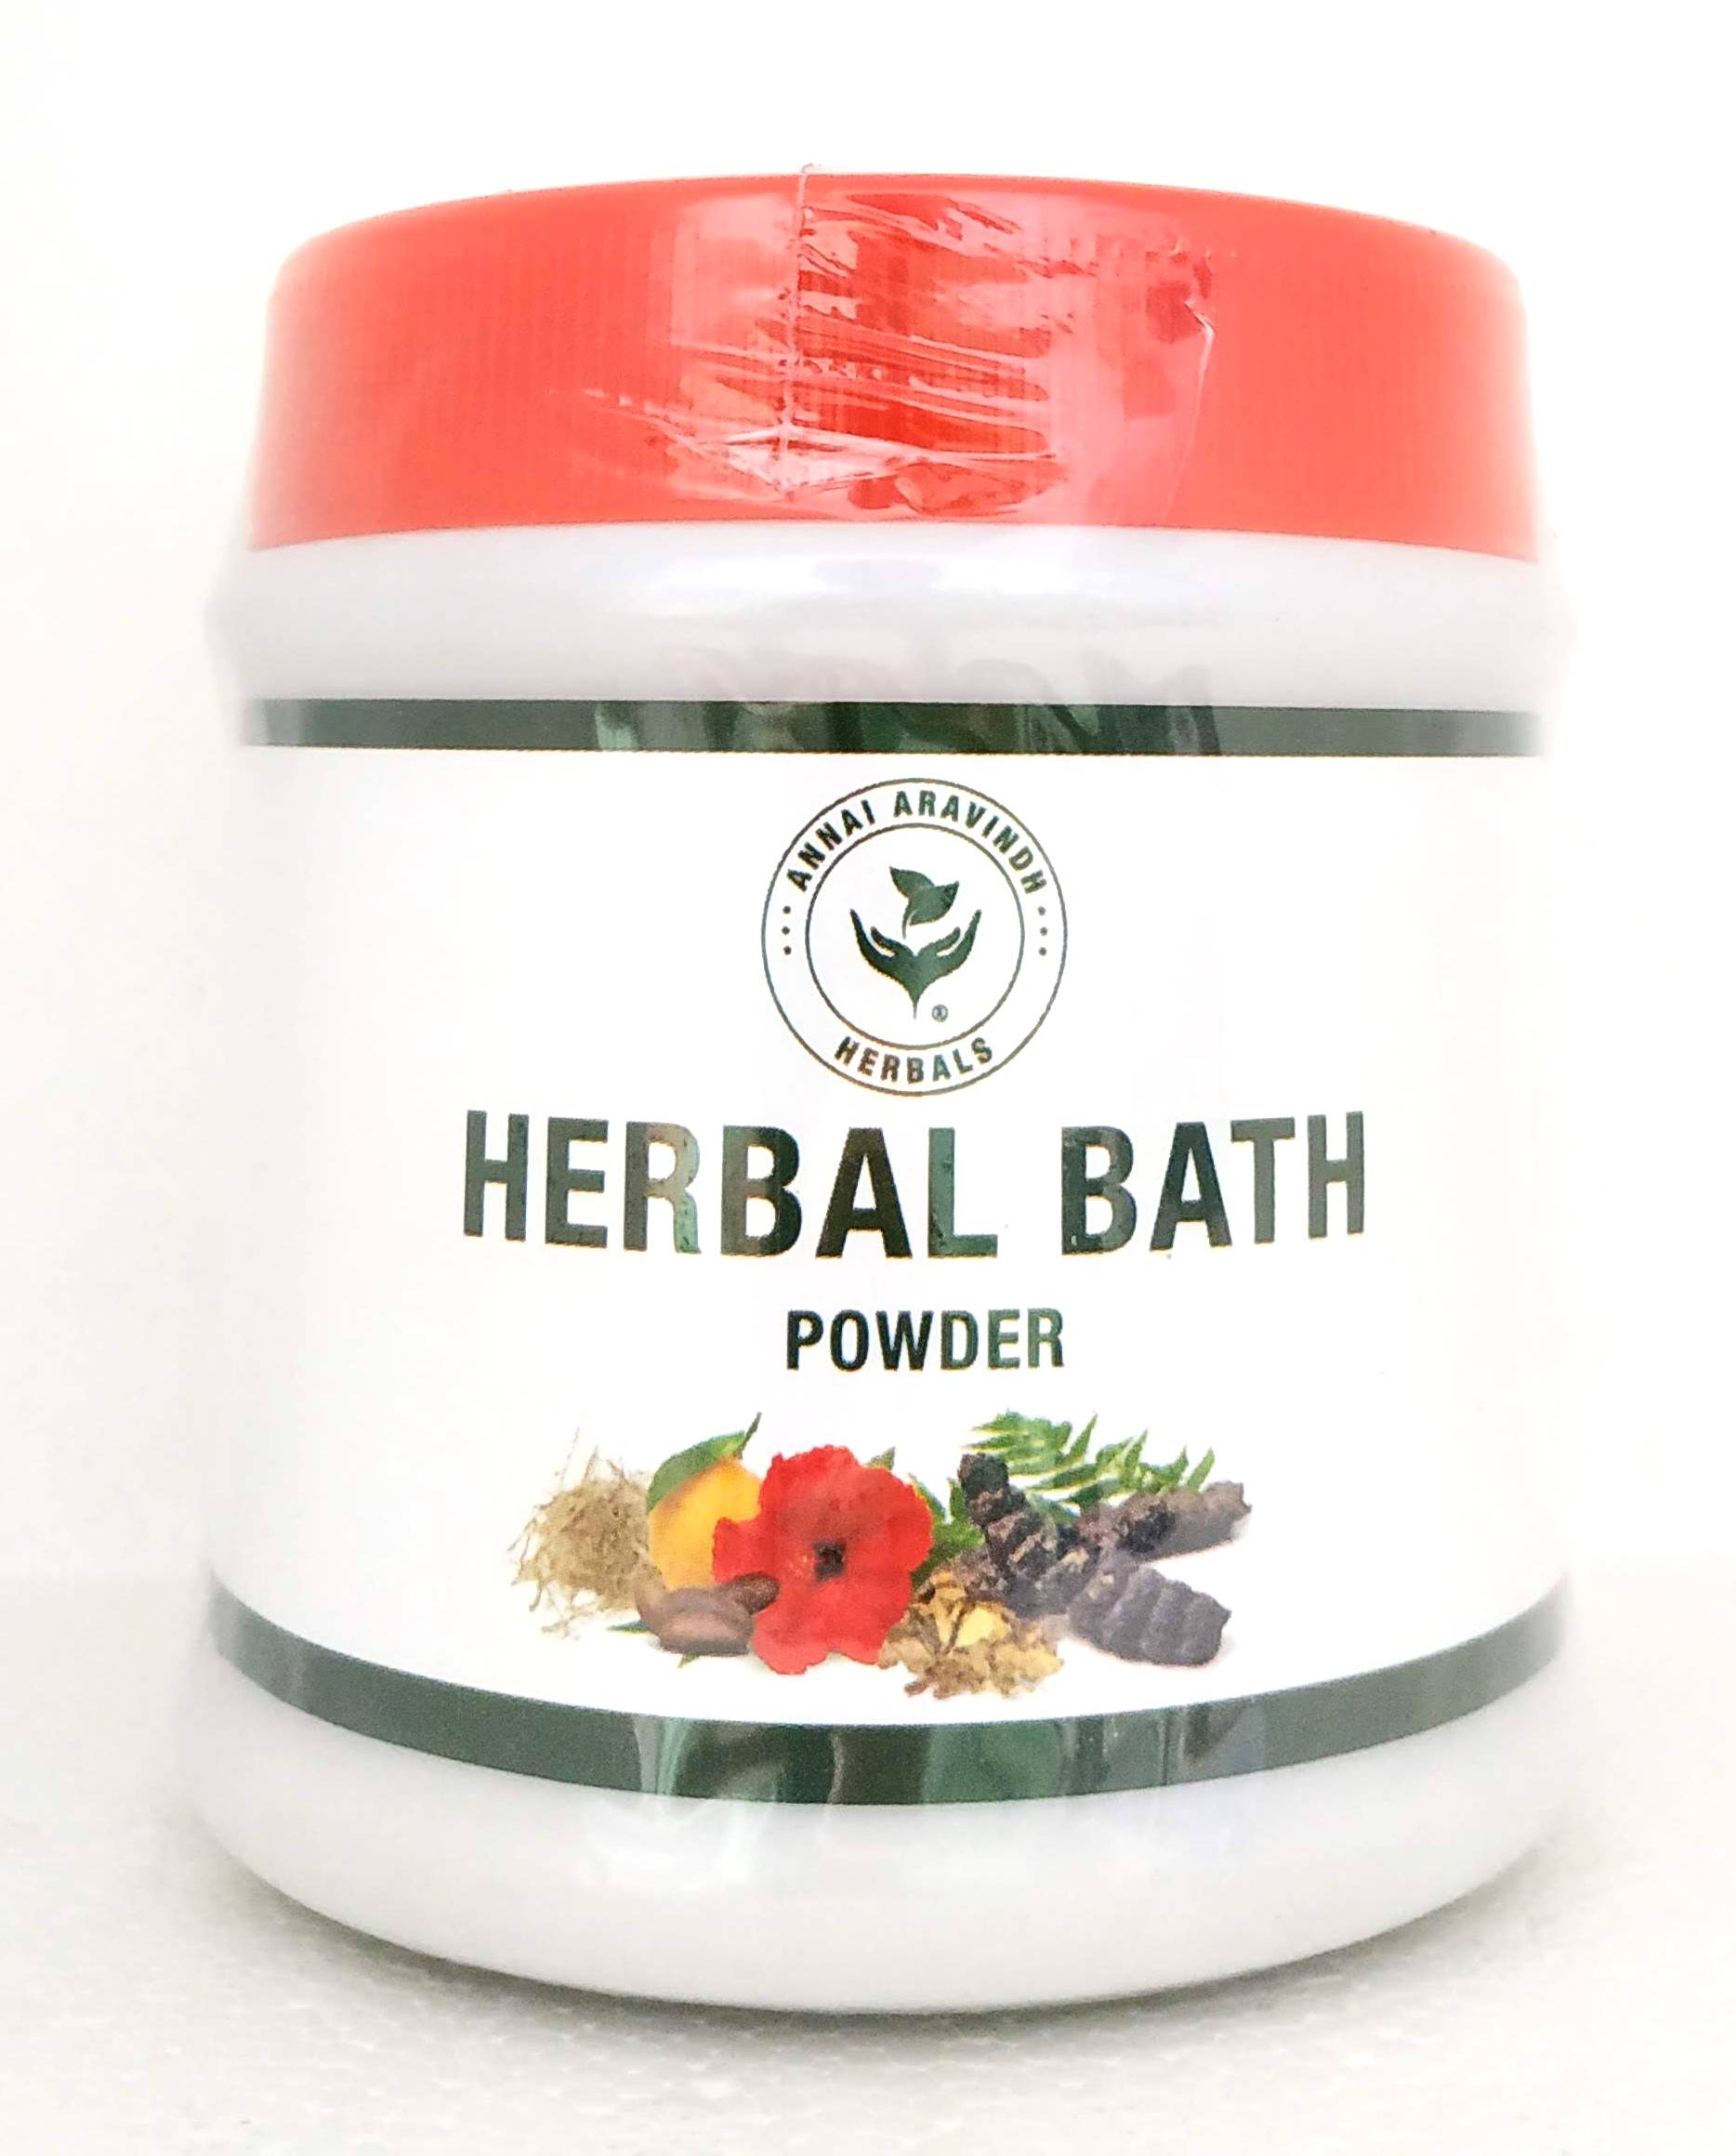 Shop Herbal bath powder 100gm at price 75.00 from Annai Aravindh Online - Ayush Care